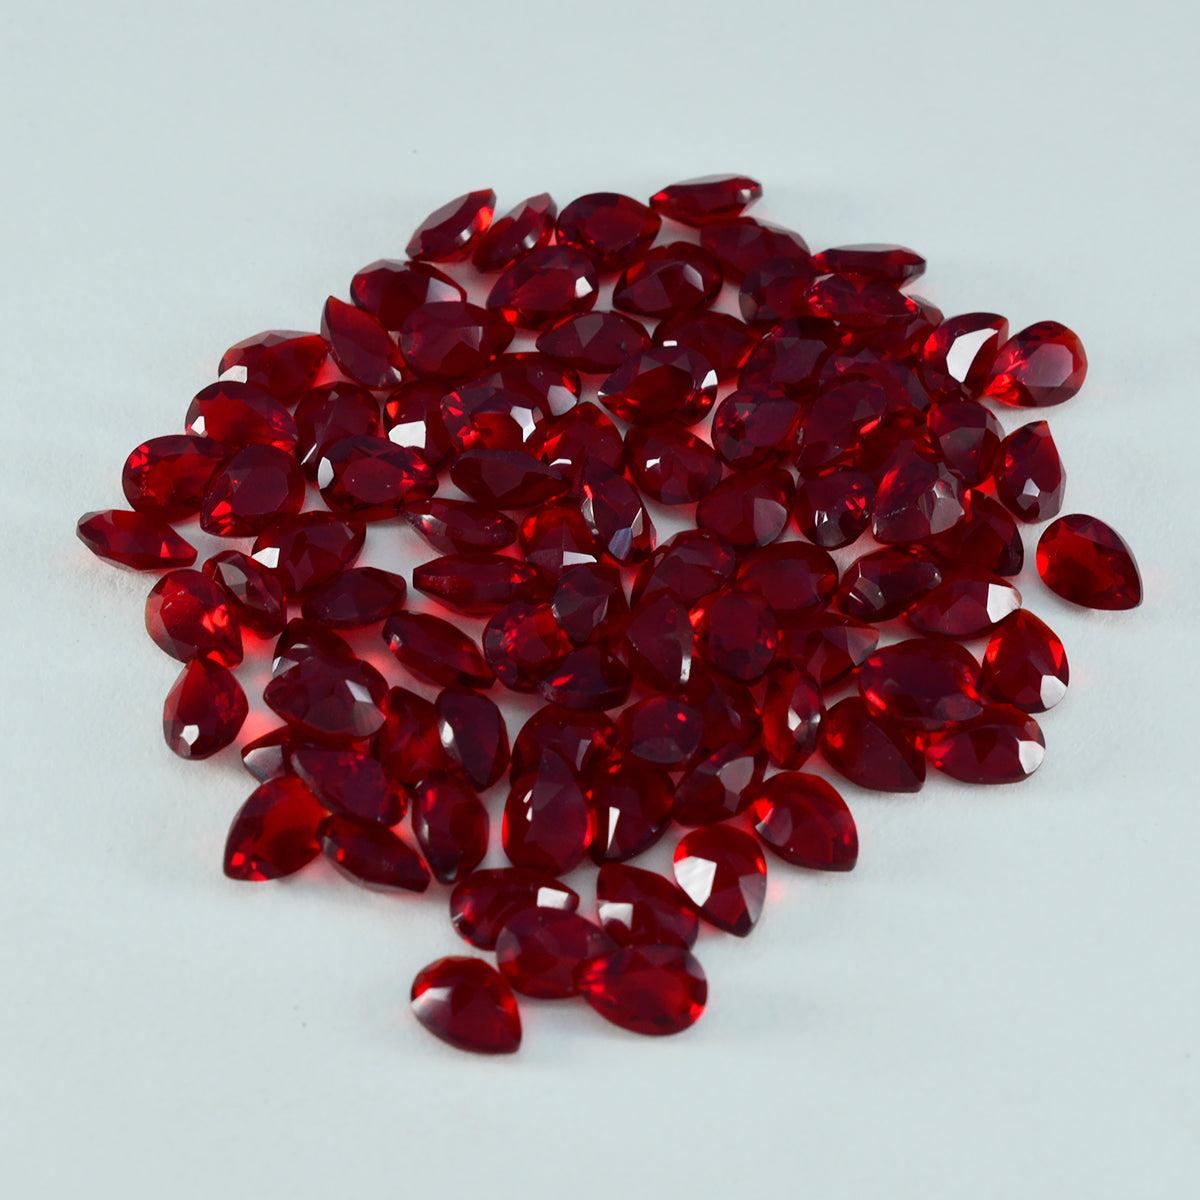 Riyogems 1PC Red Ruby CZ Faceted 3x5 mm Pear Shape sweet Quality Gem